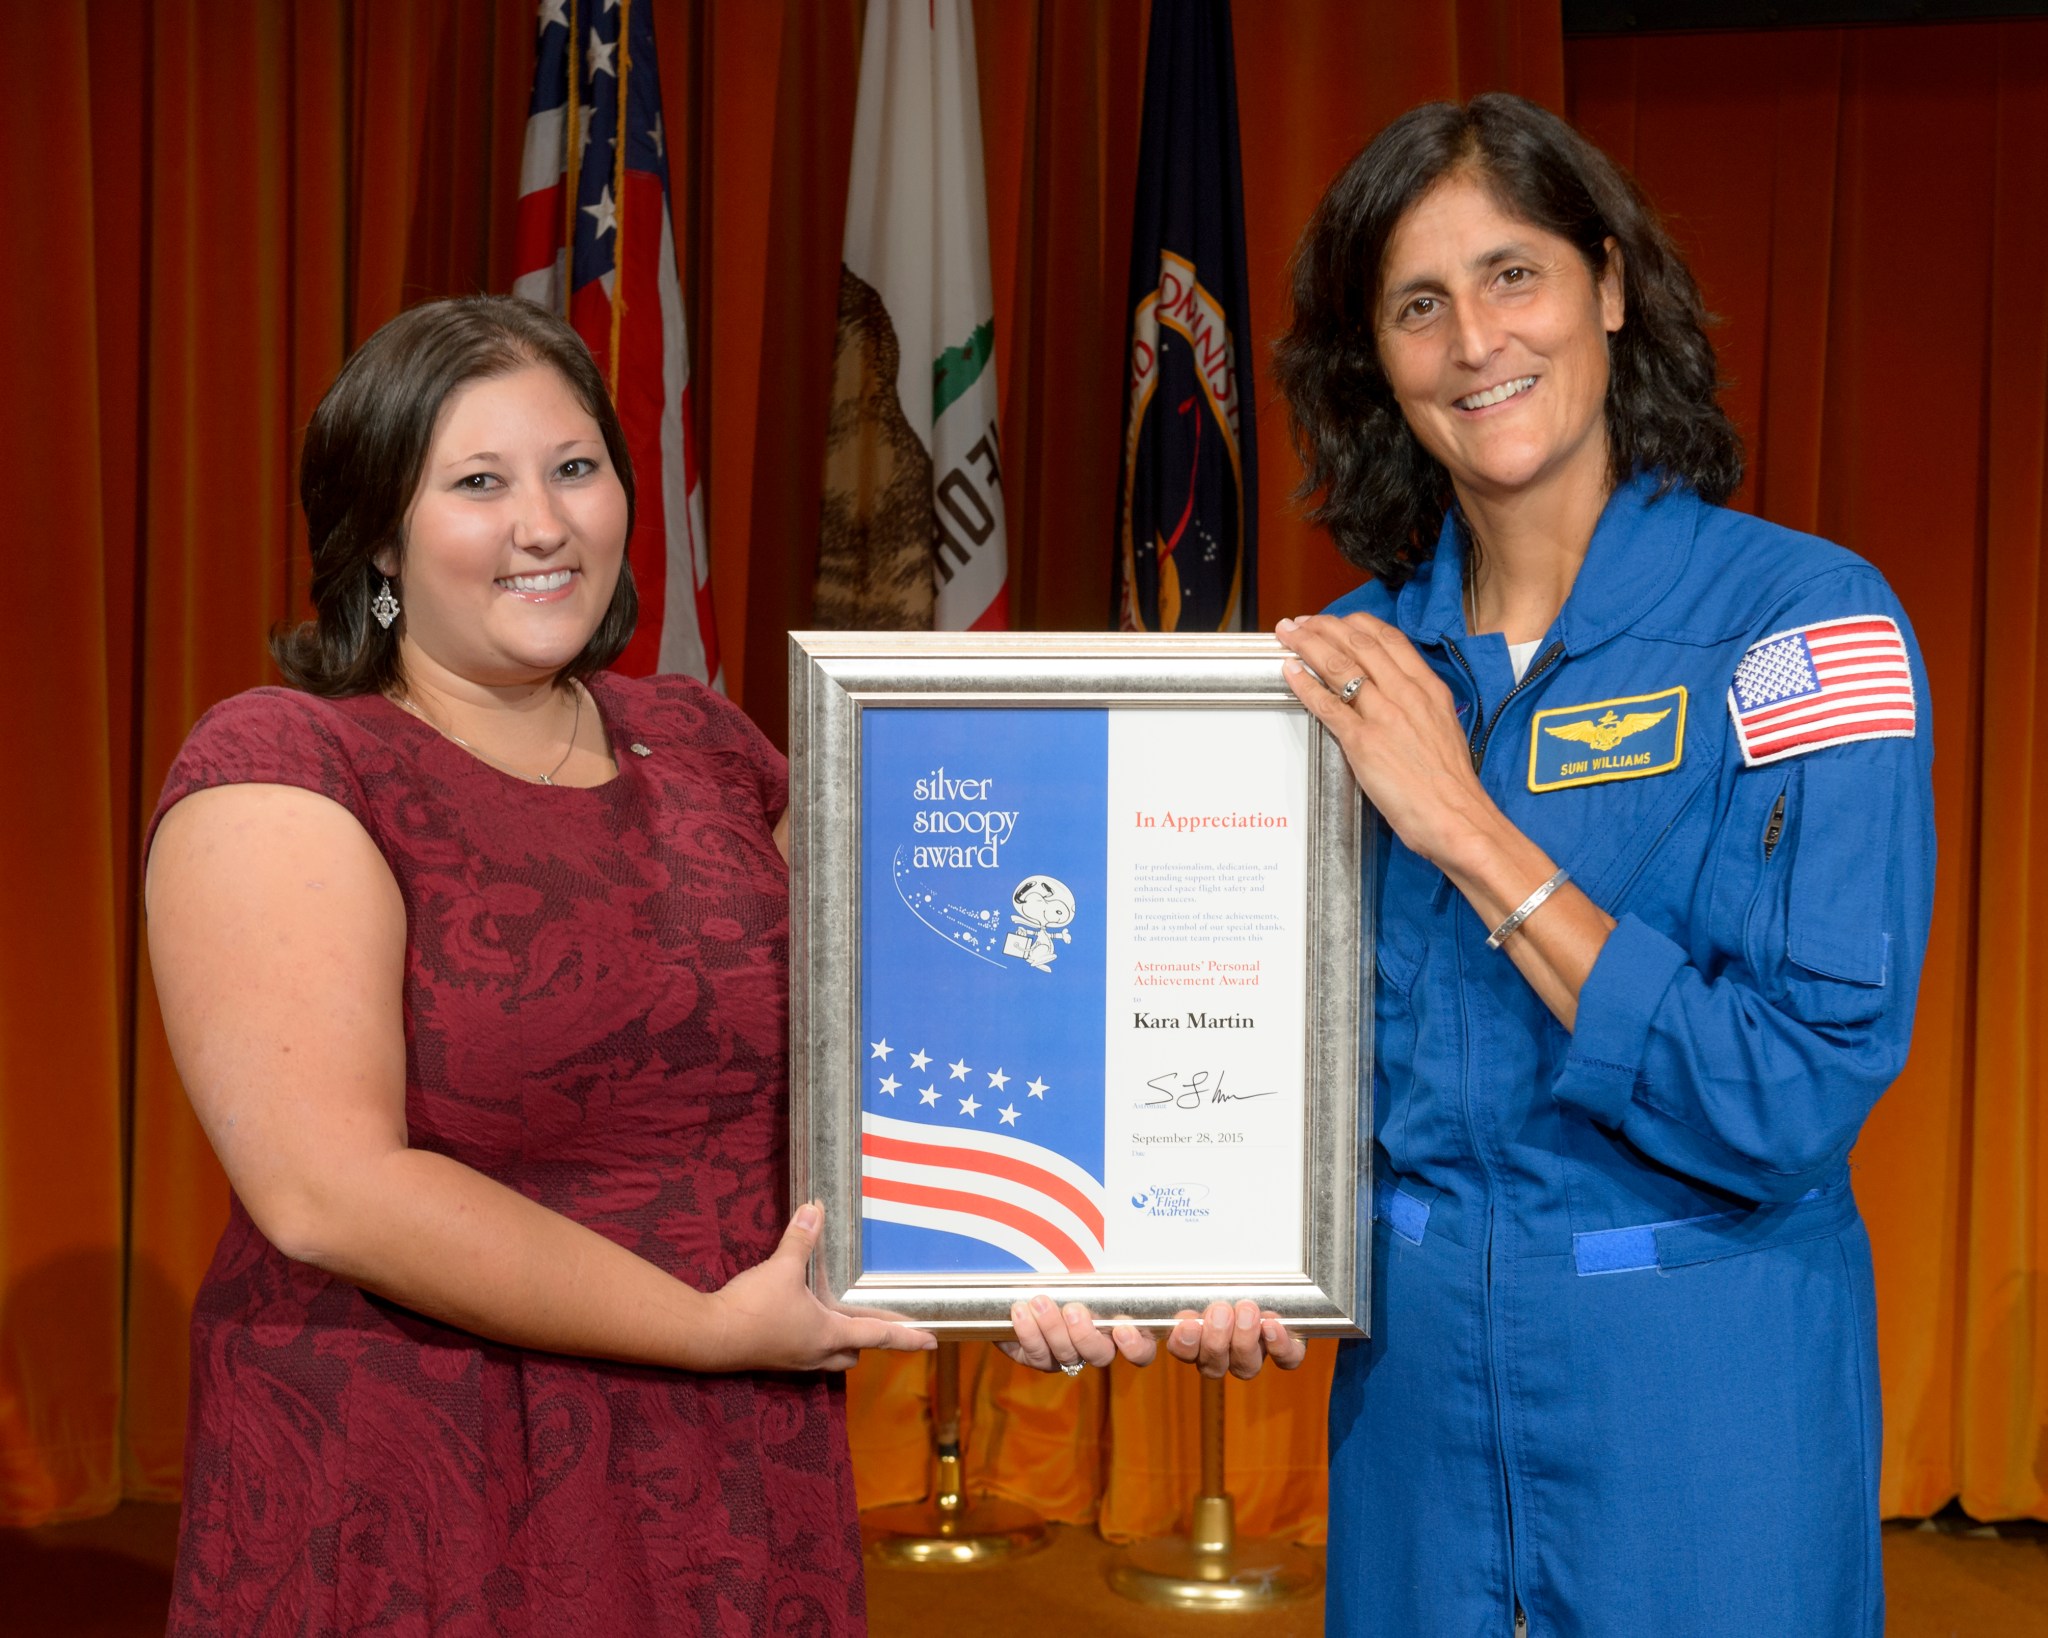 Kara Martin is presented with a Silver Snoopy Award by NASA Astronaut Sunita Williams.